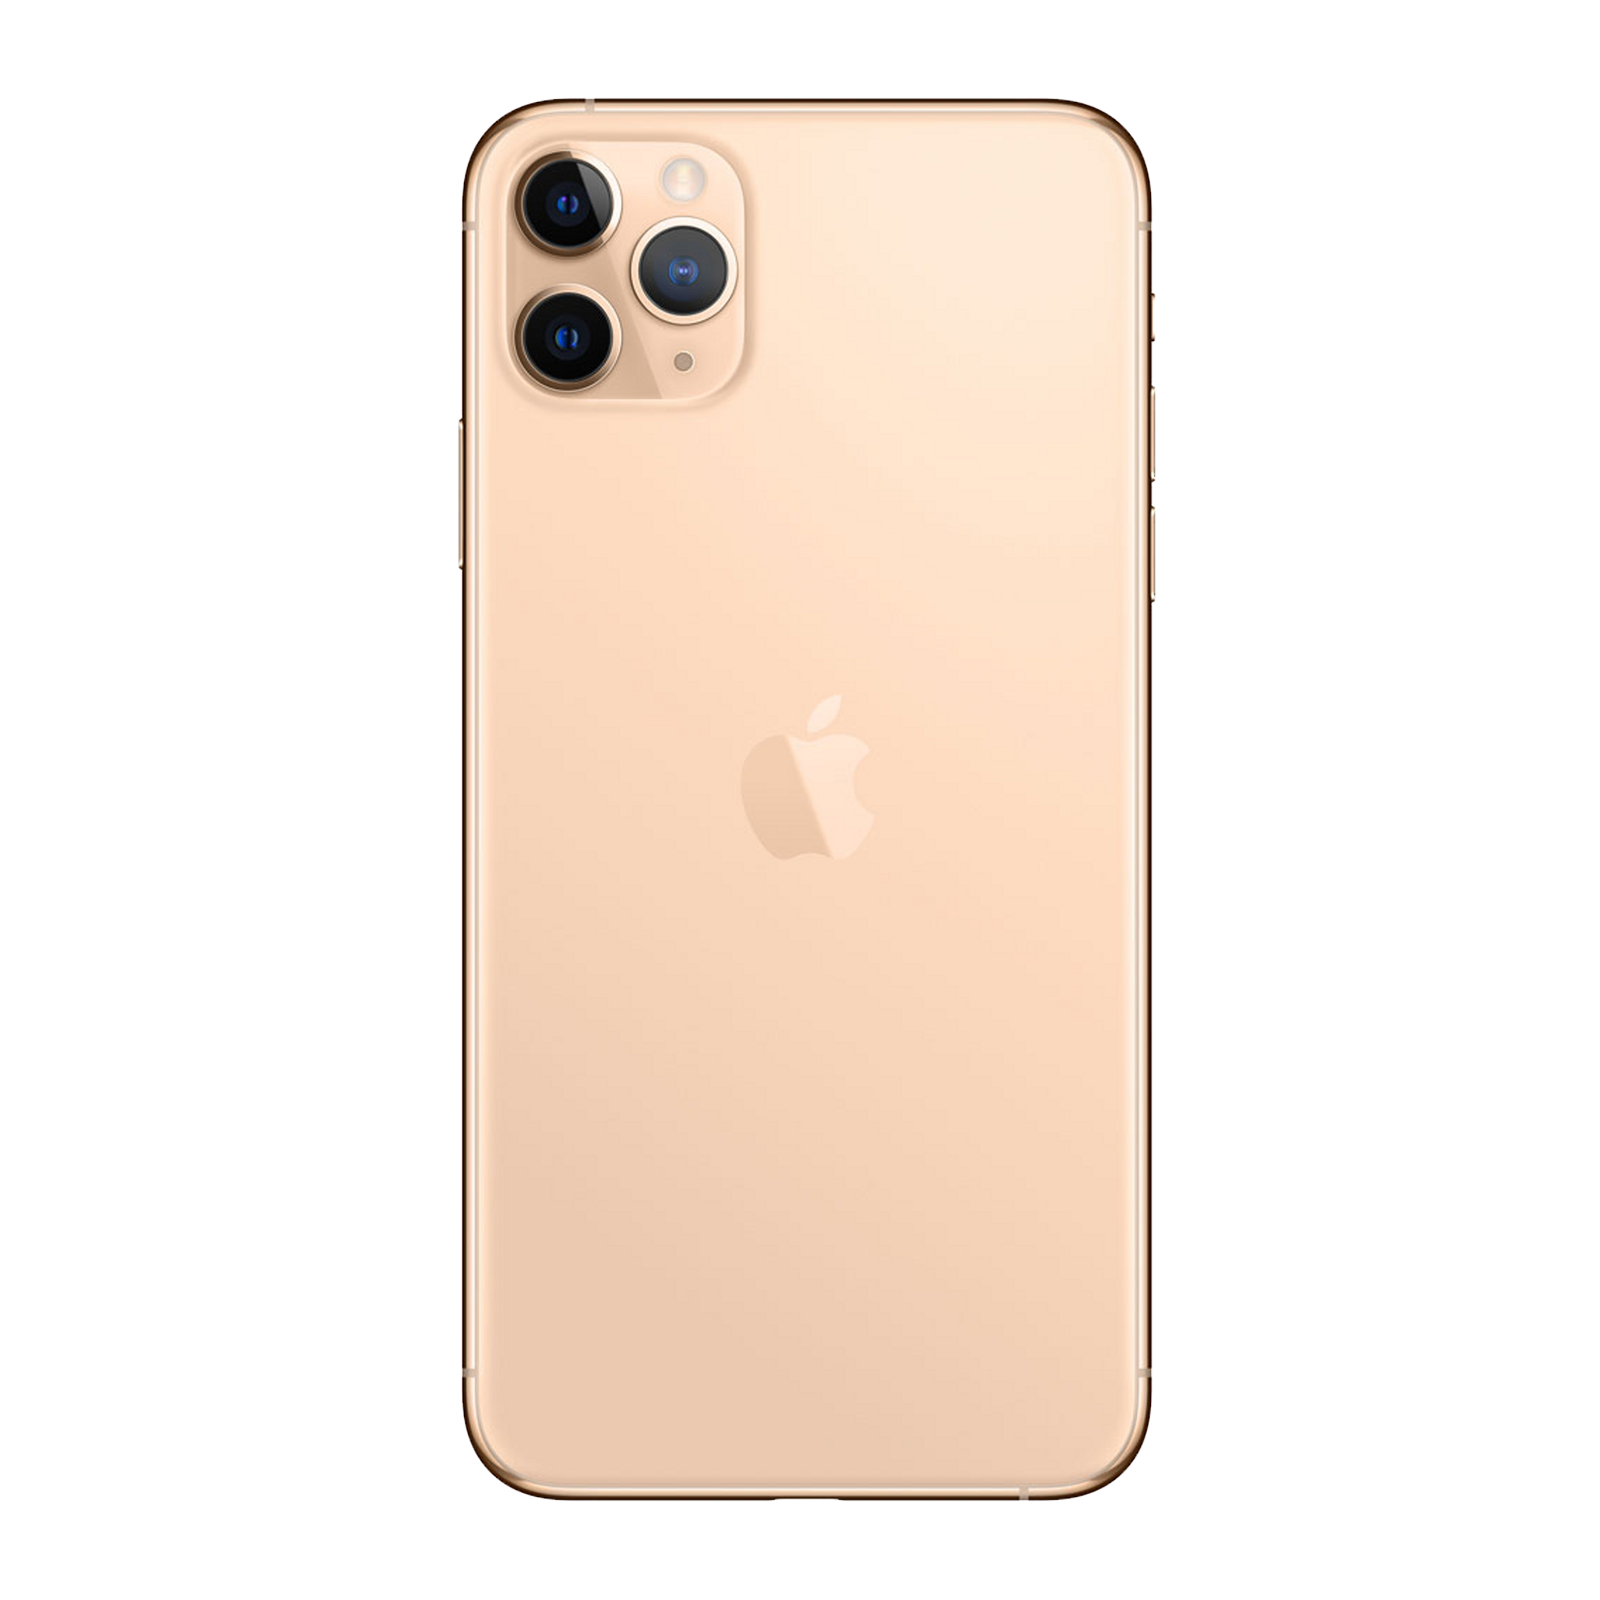 Apple iPhone 11 Pro 512GB Gold Fair - Unlocked